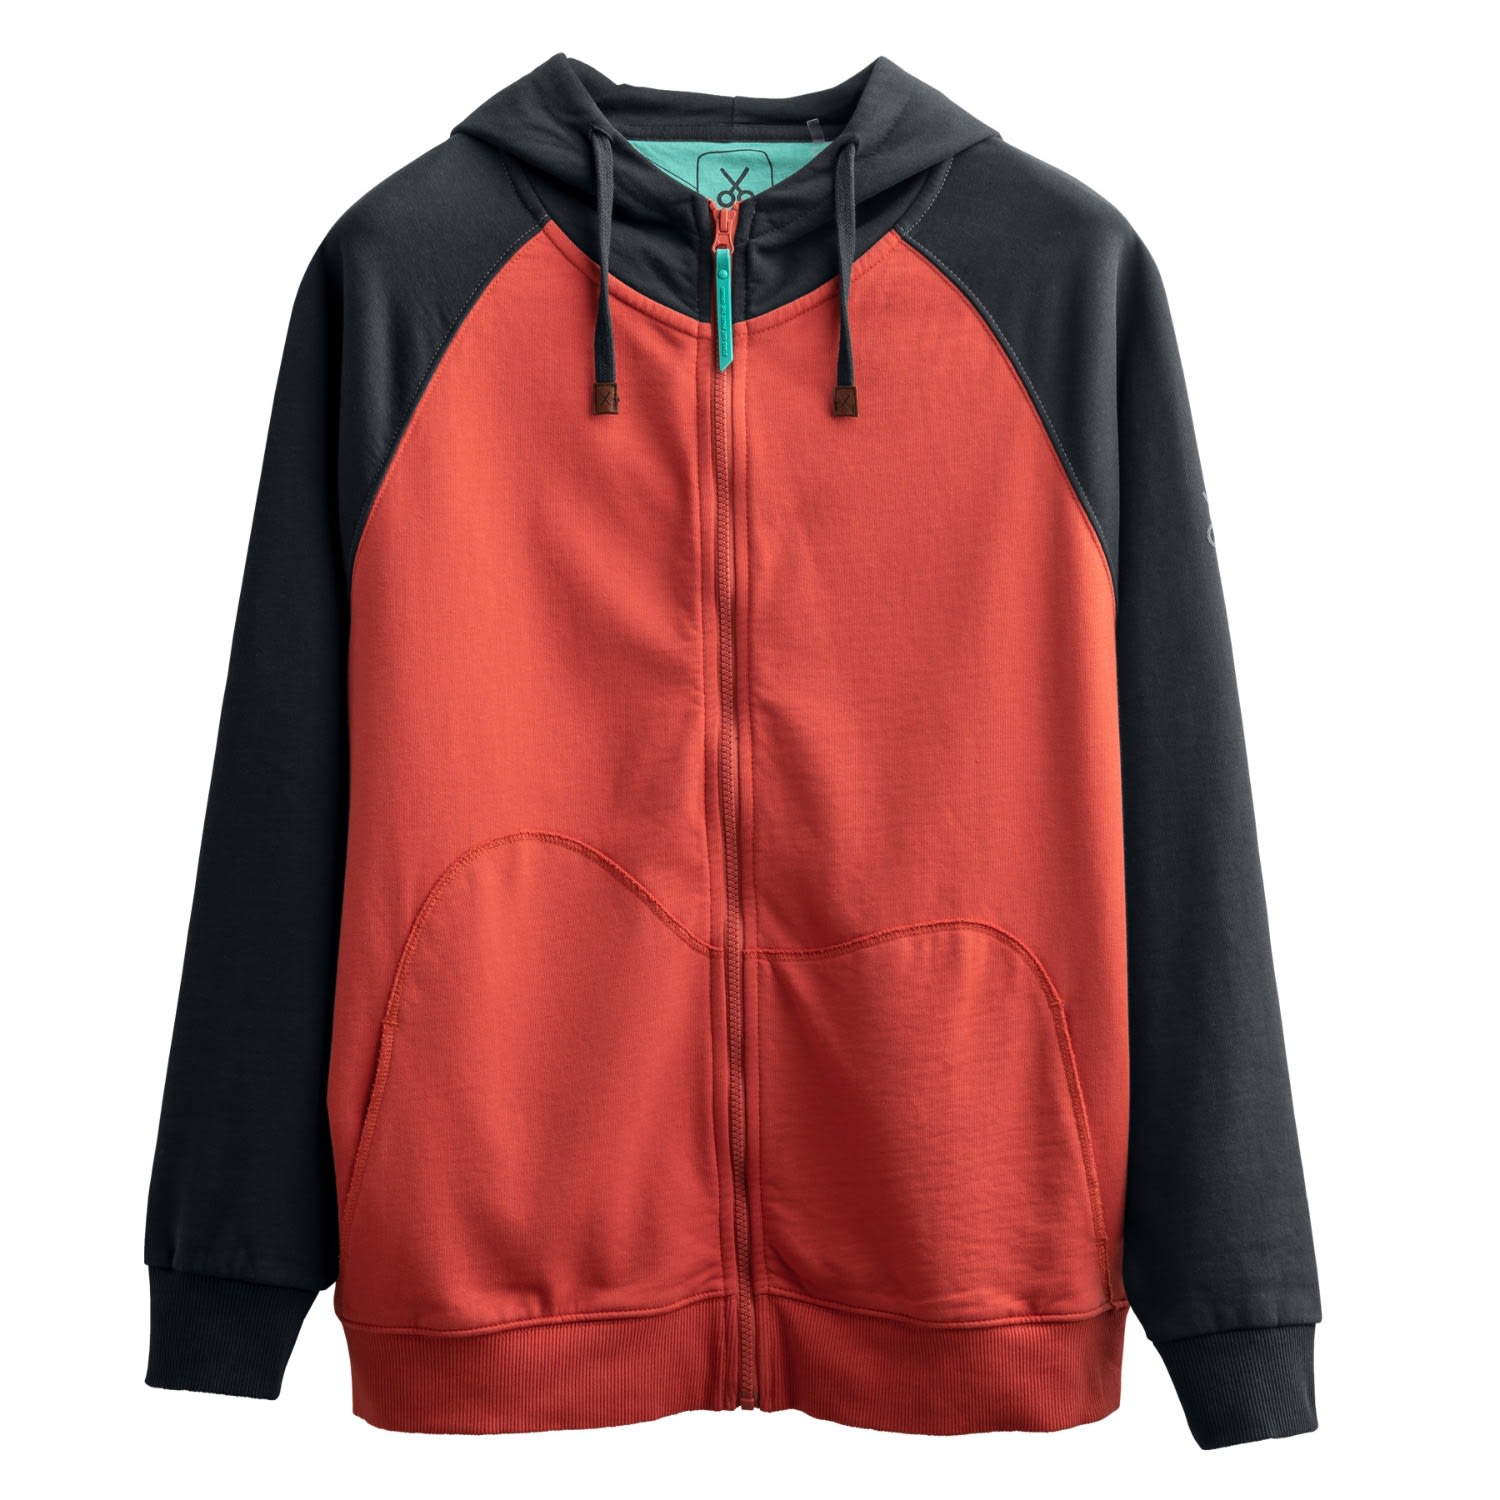 Men's Red Unisex Design Zipper Hoodie Sweatshirt - Kleuzip - Coral Extra Small KAFT